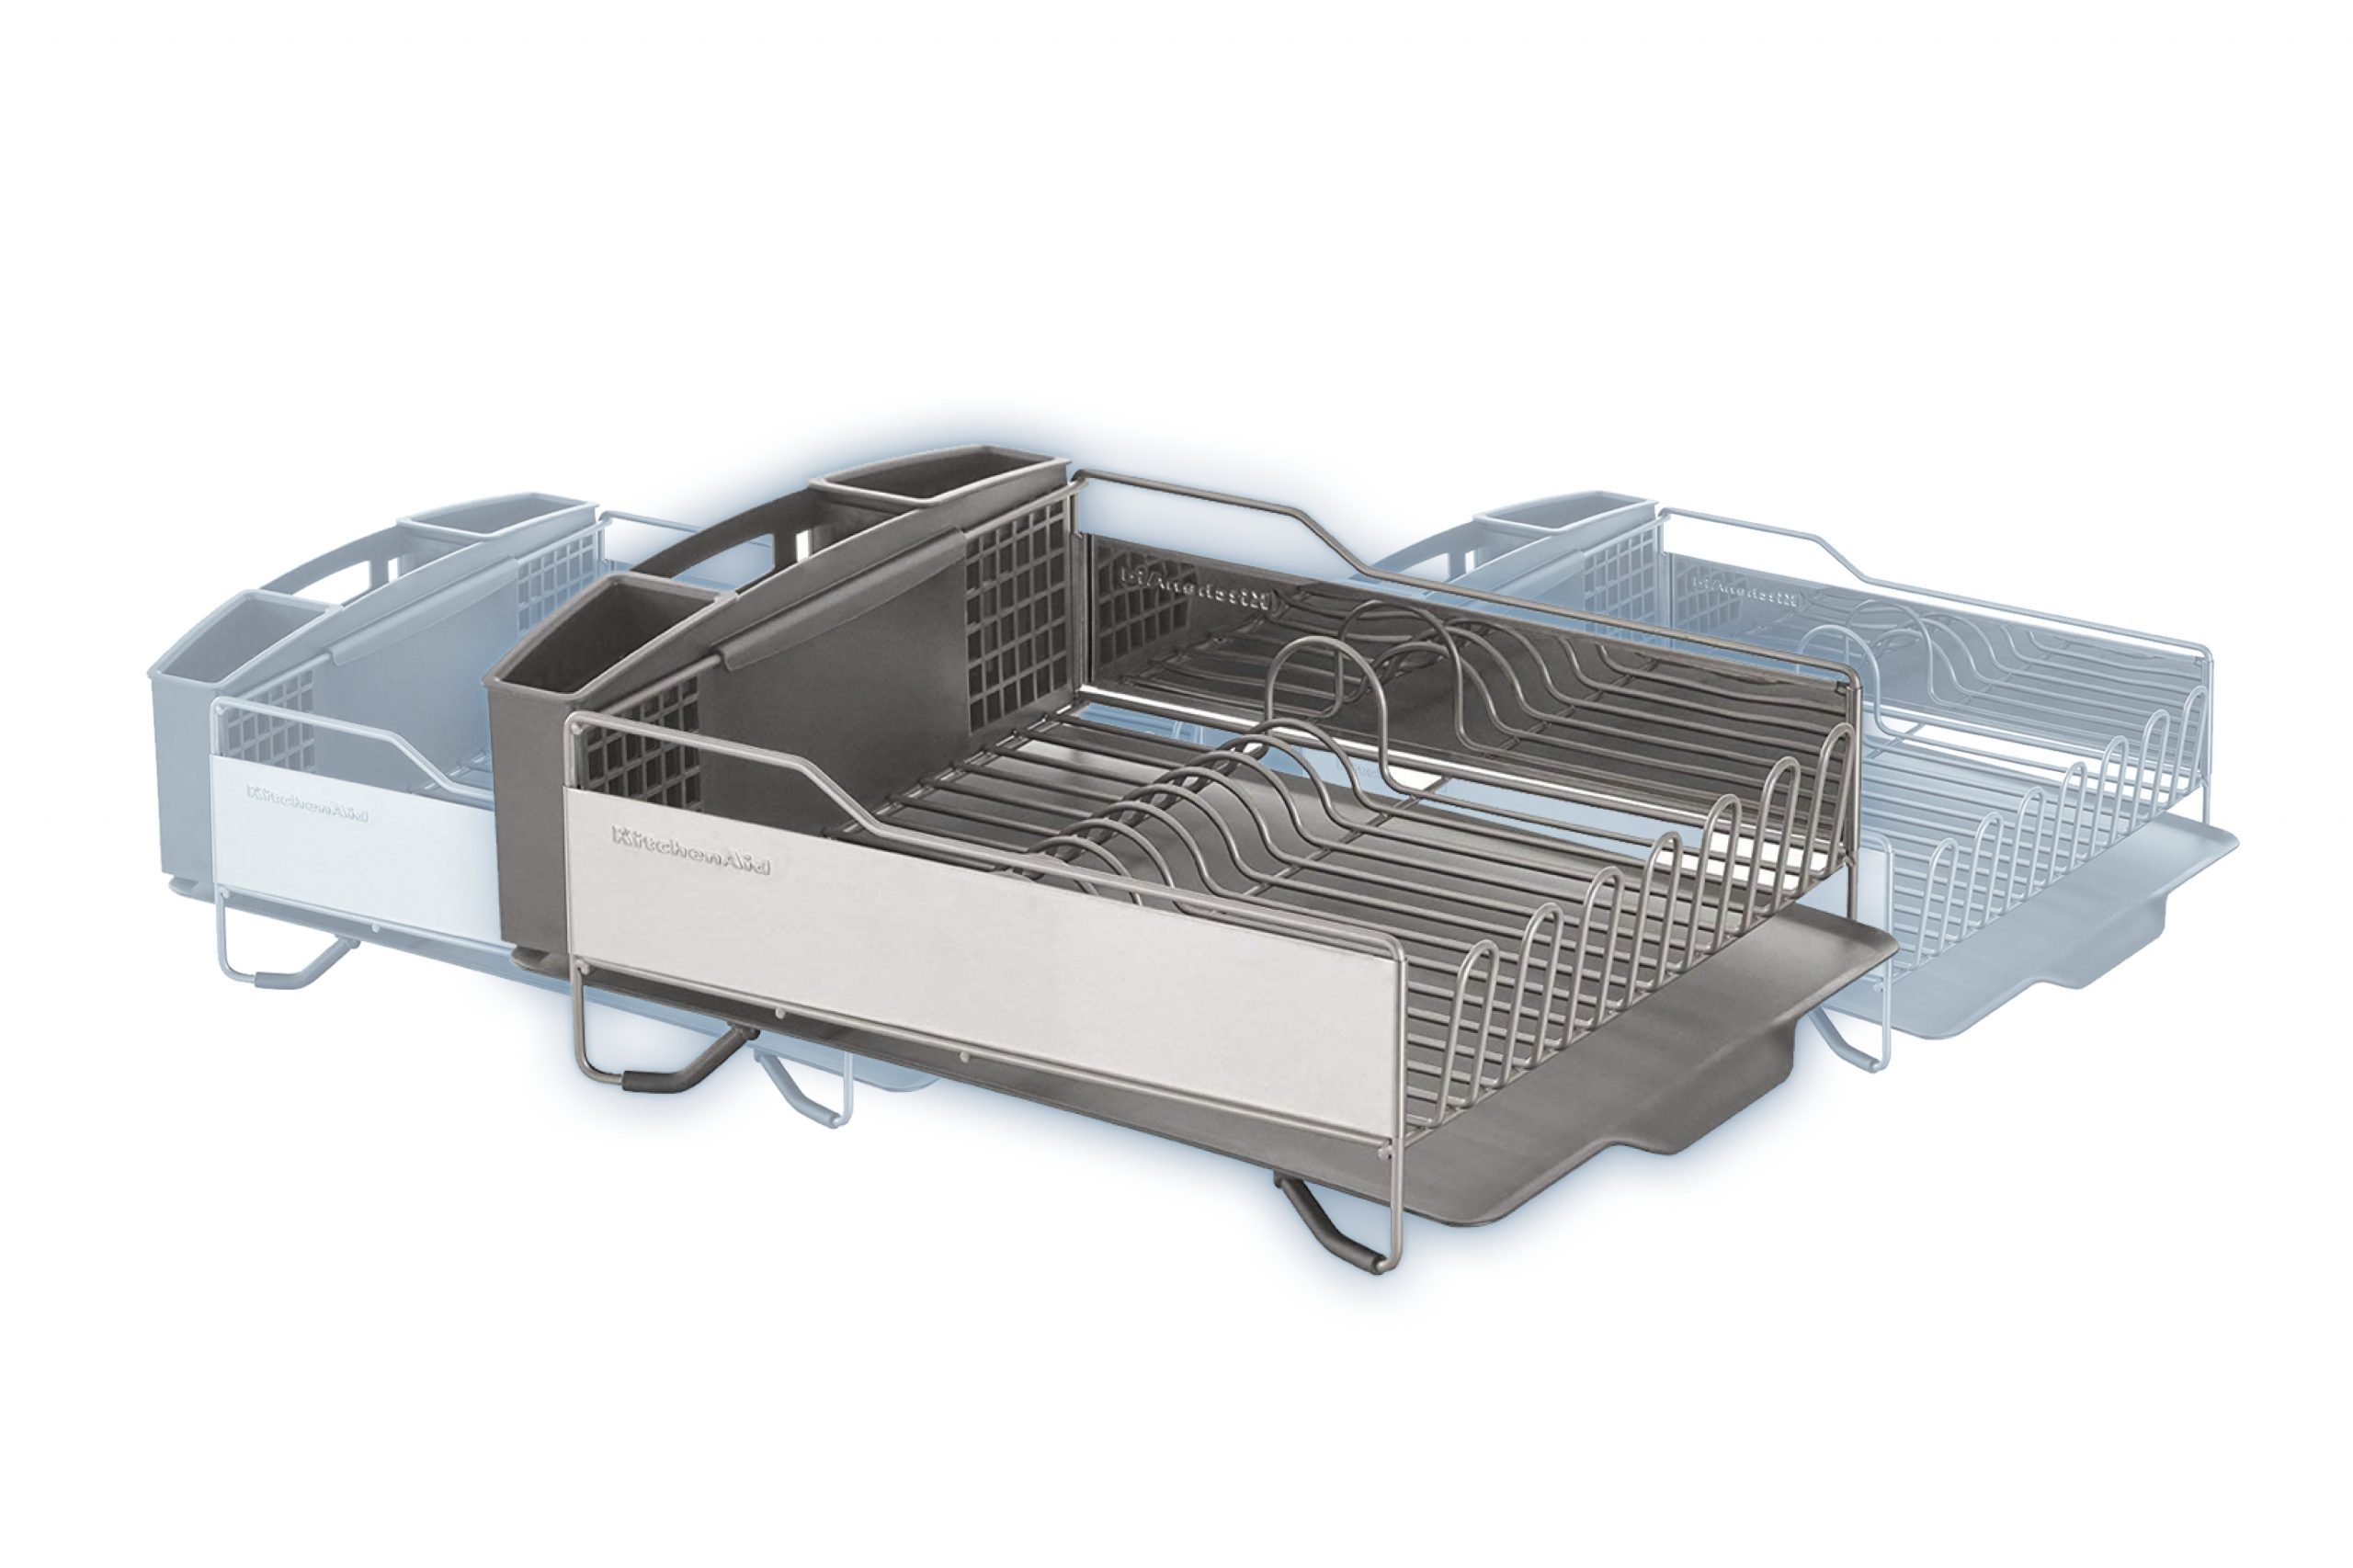 KitchenAid Stainless Steel Dish-Drying Rack Costco  Dish rack drying, Kitchen  rack, Drying rack kitchen